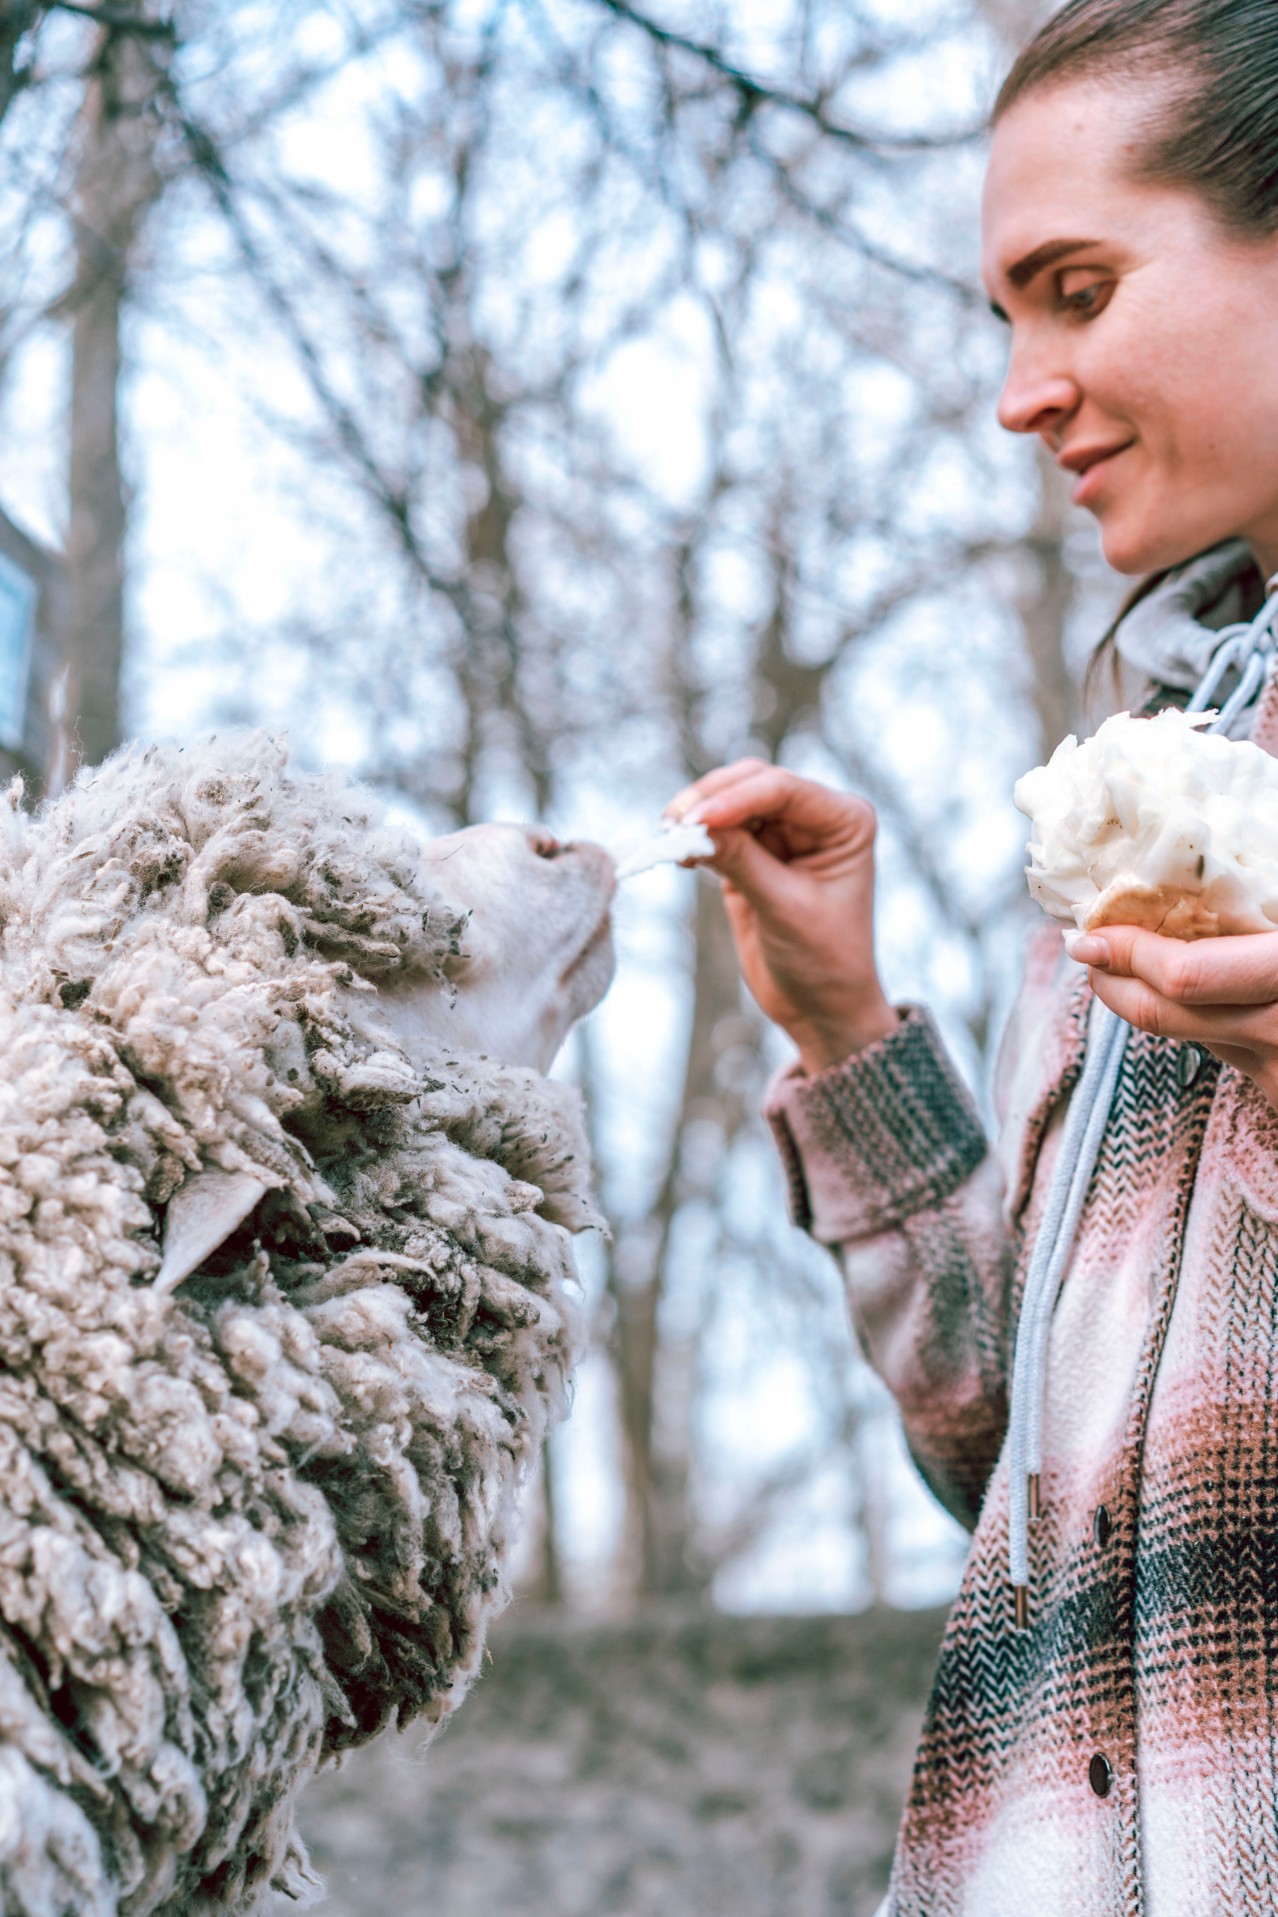 Smiling woman feeds white sheep